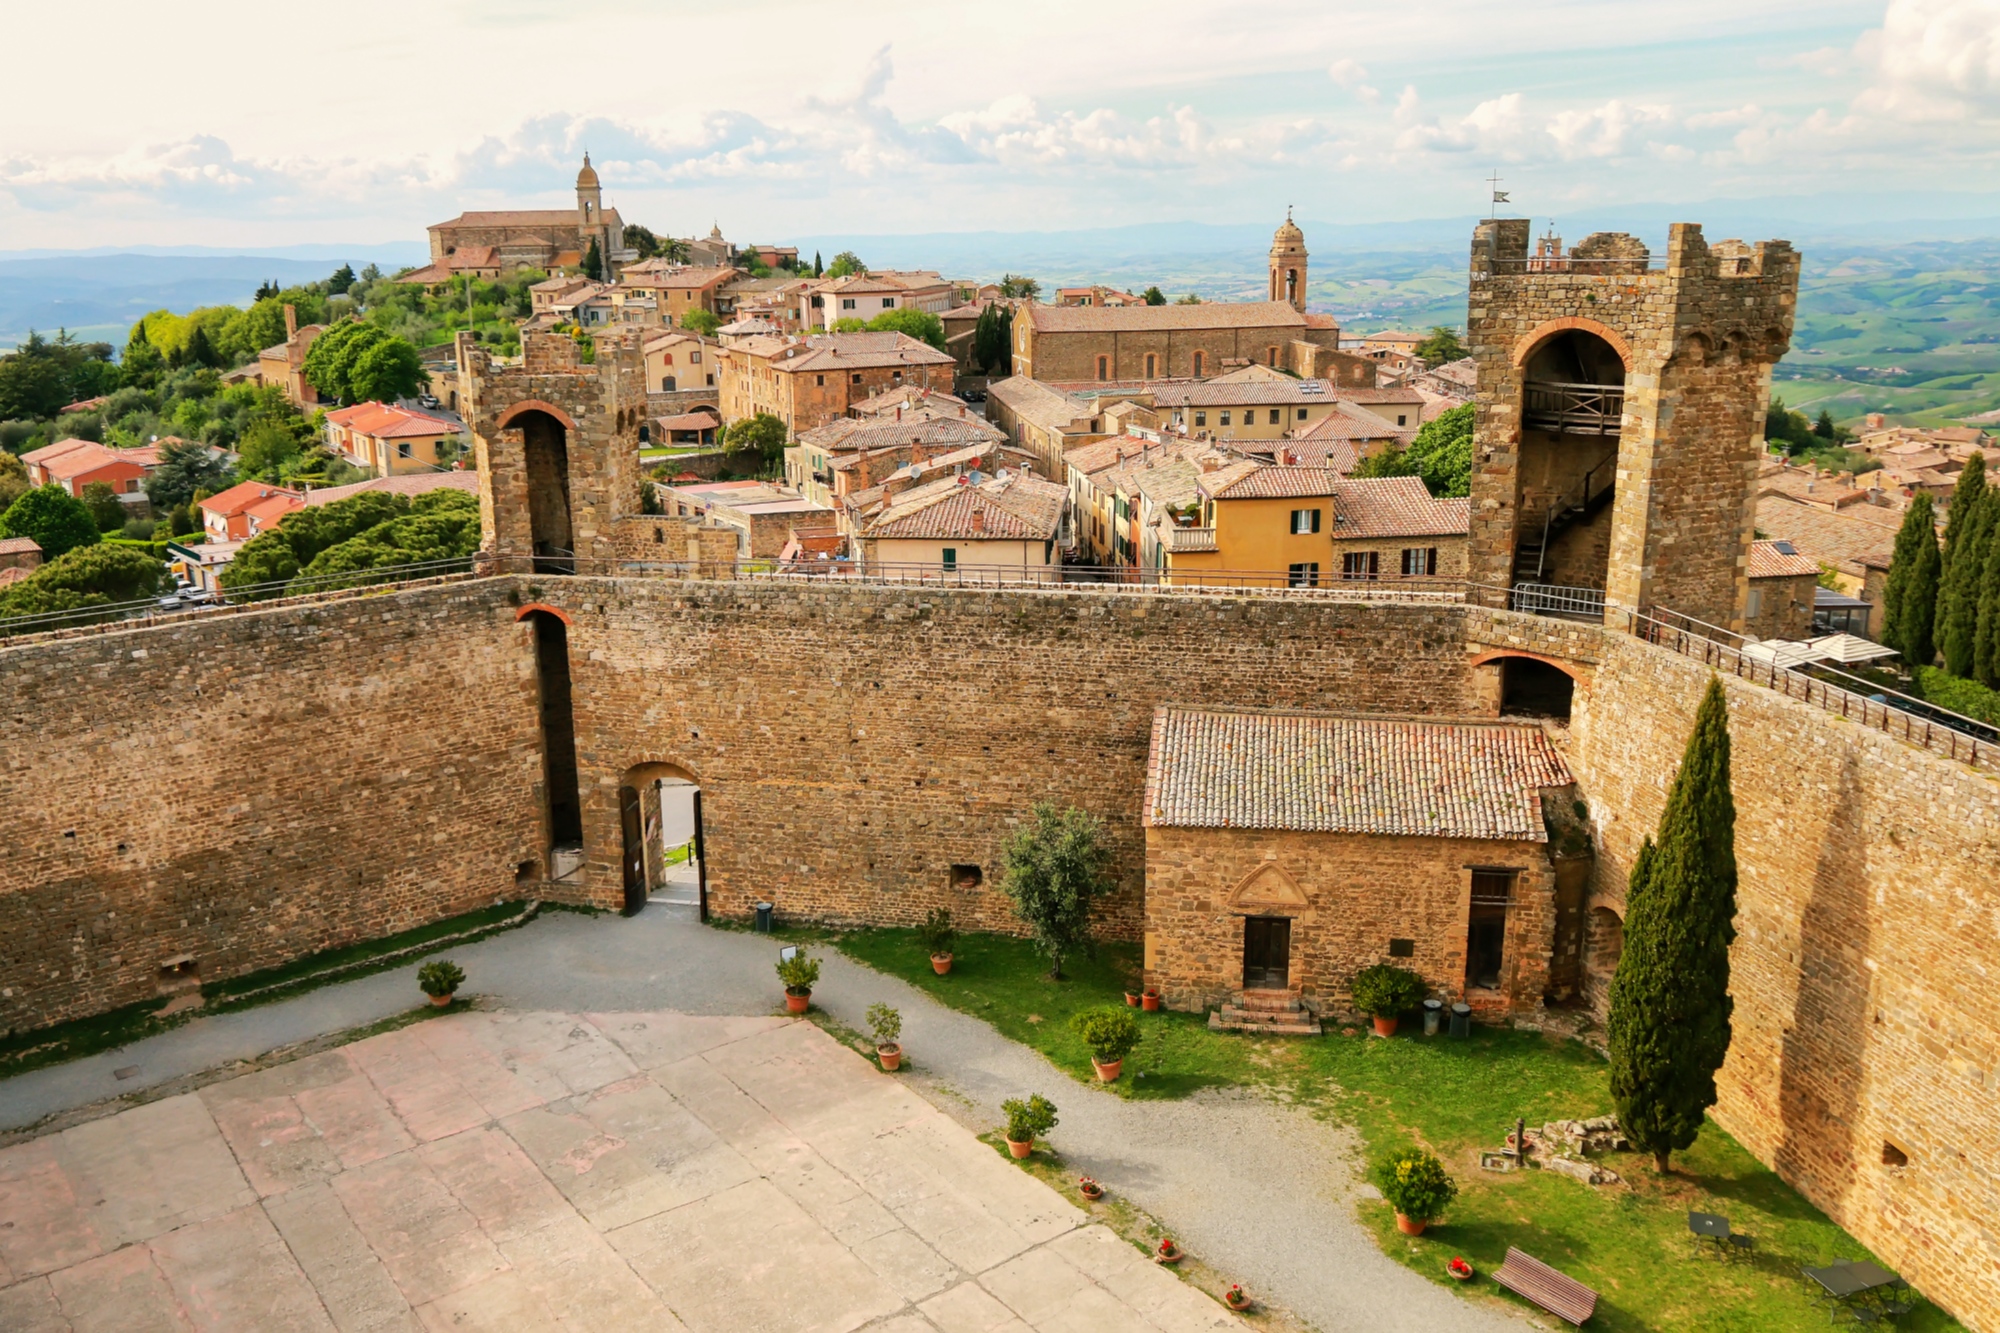 Forteresse et ville de Montalcino